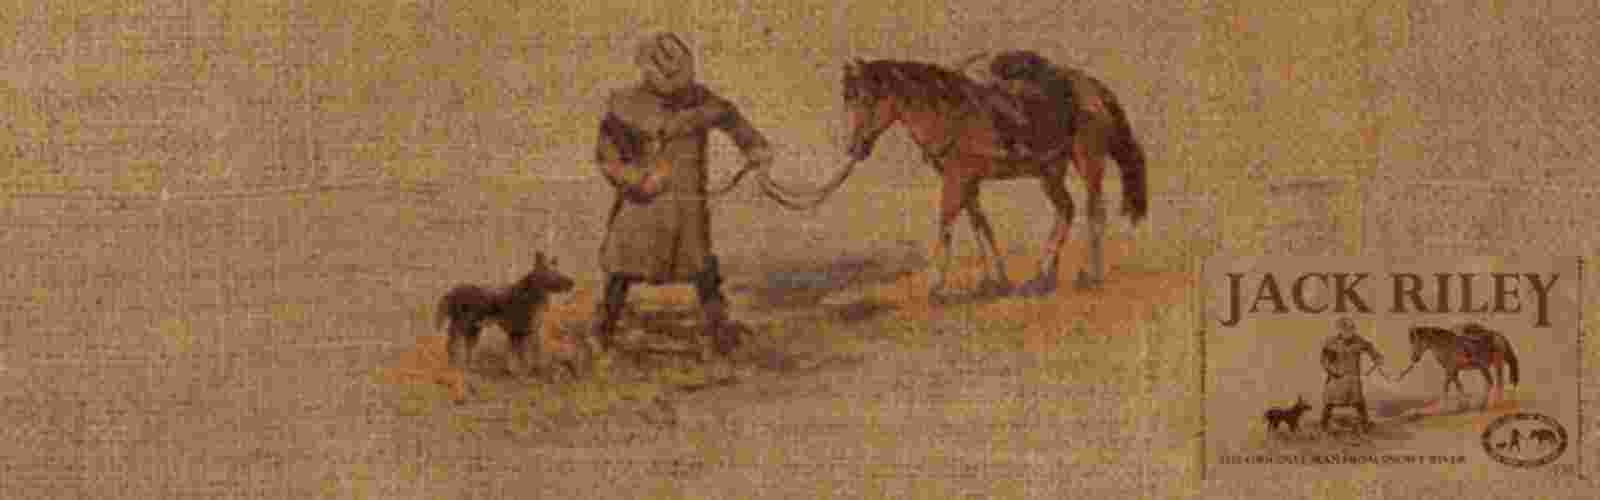 Xxx Com 3gp Horses And Girls - Jack Riley 1841 â€“ 1914